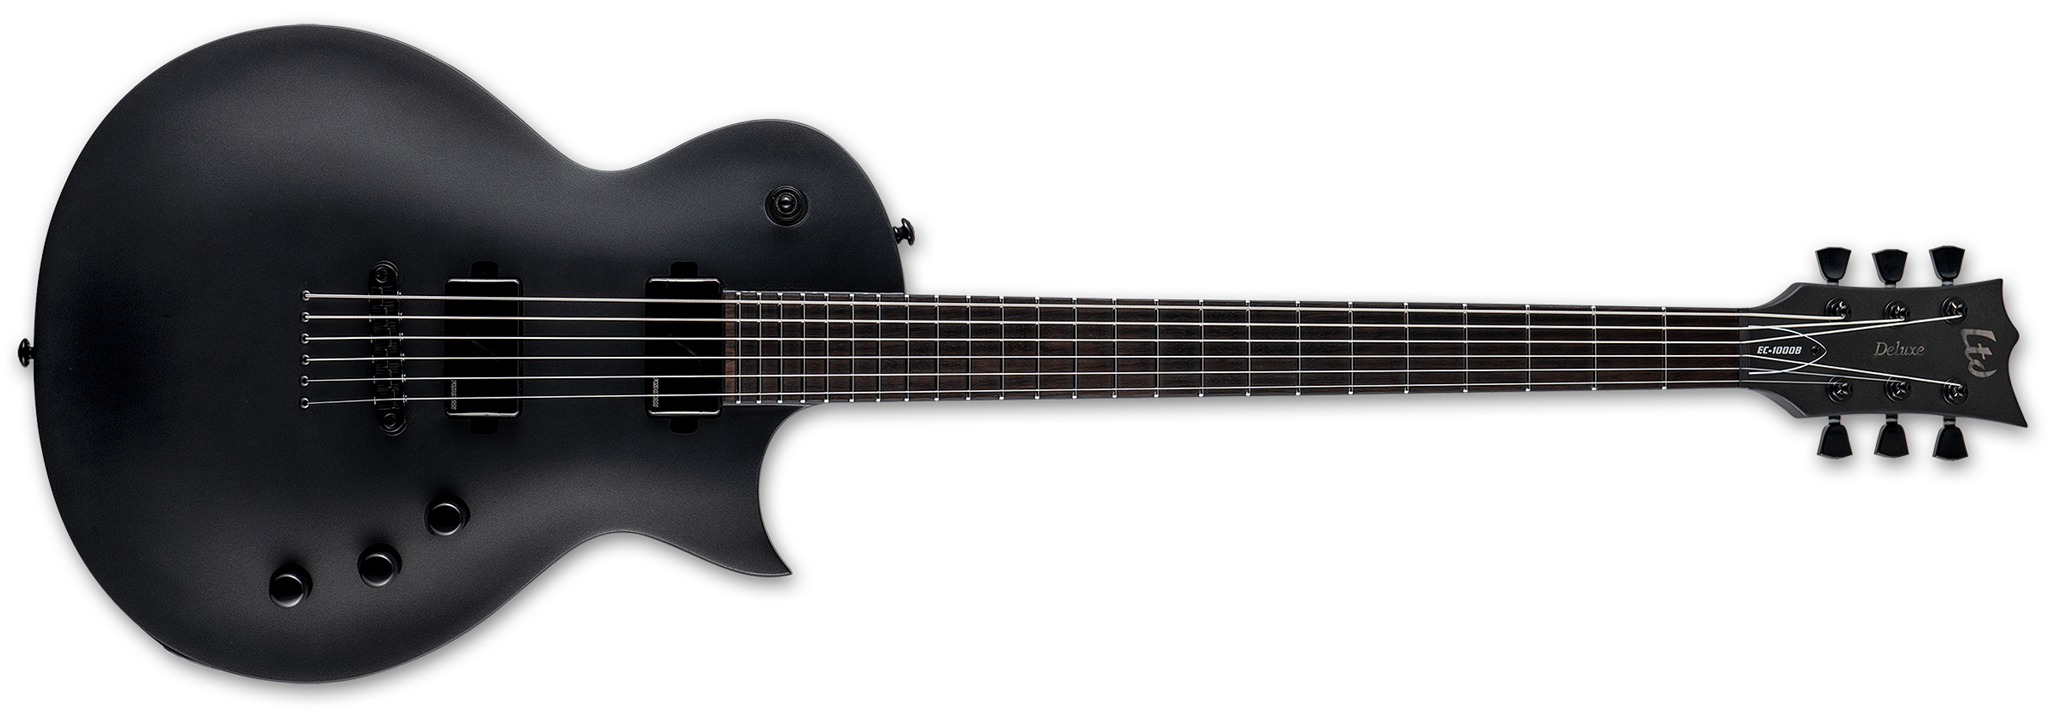 LTD EC-1000 Baritone Charcoal Metallic Satin  6-String Electric Guitar  